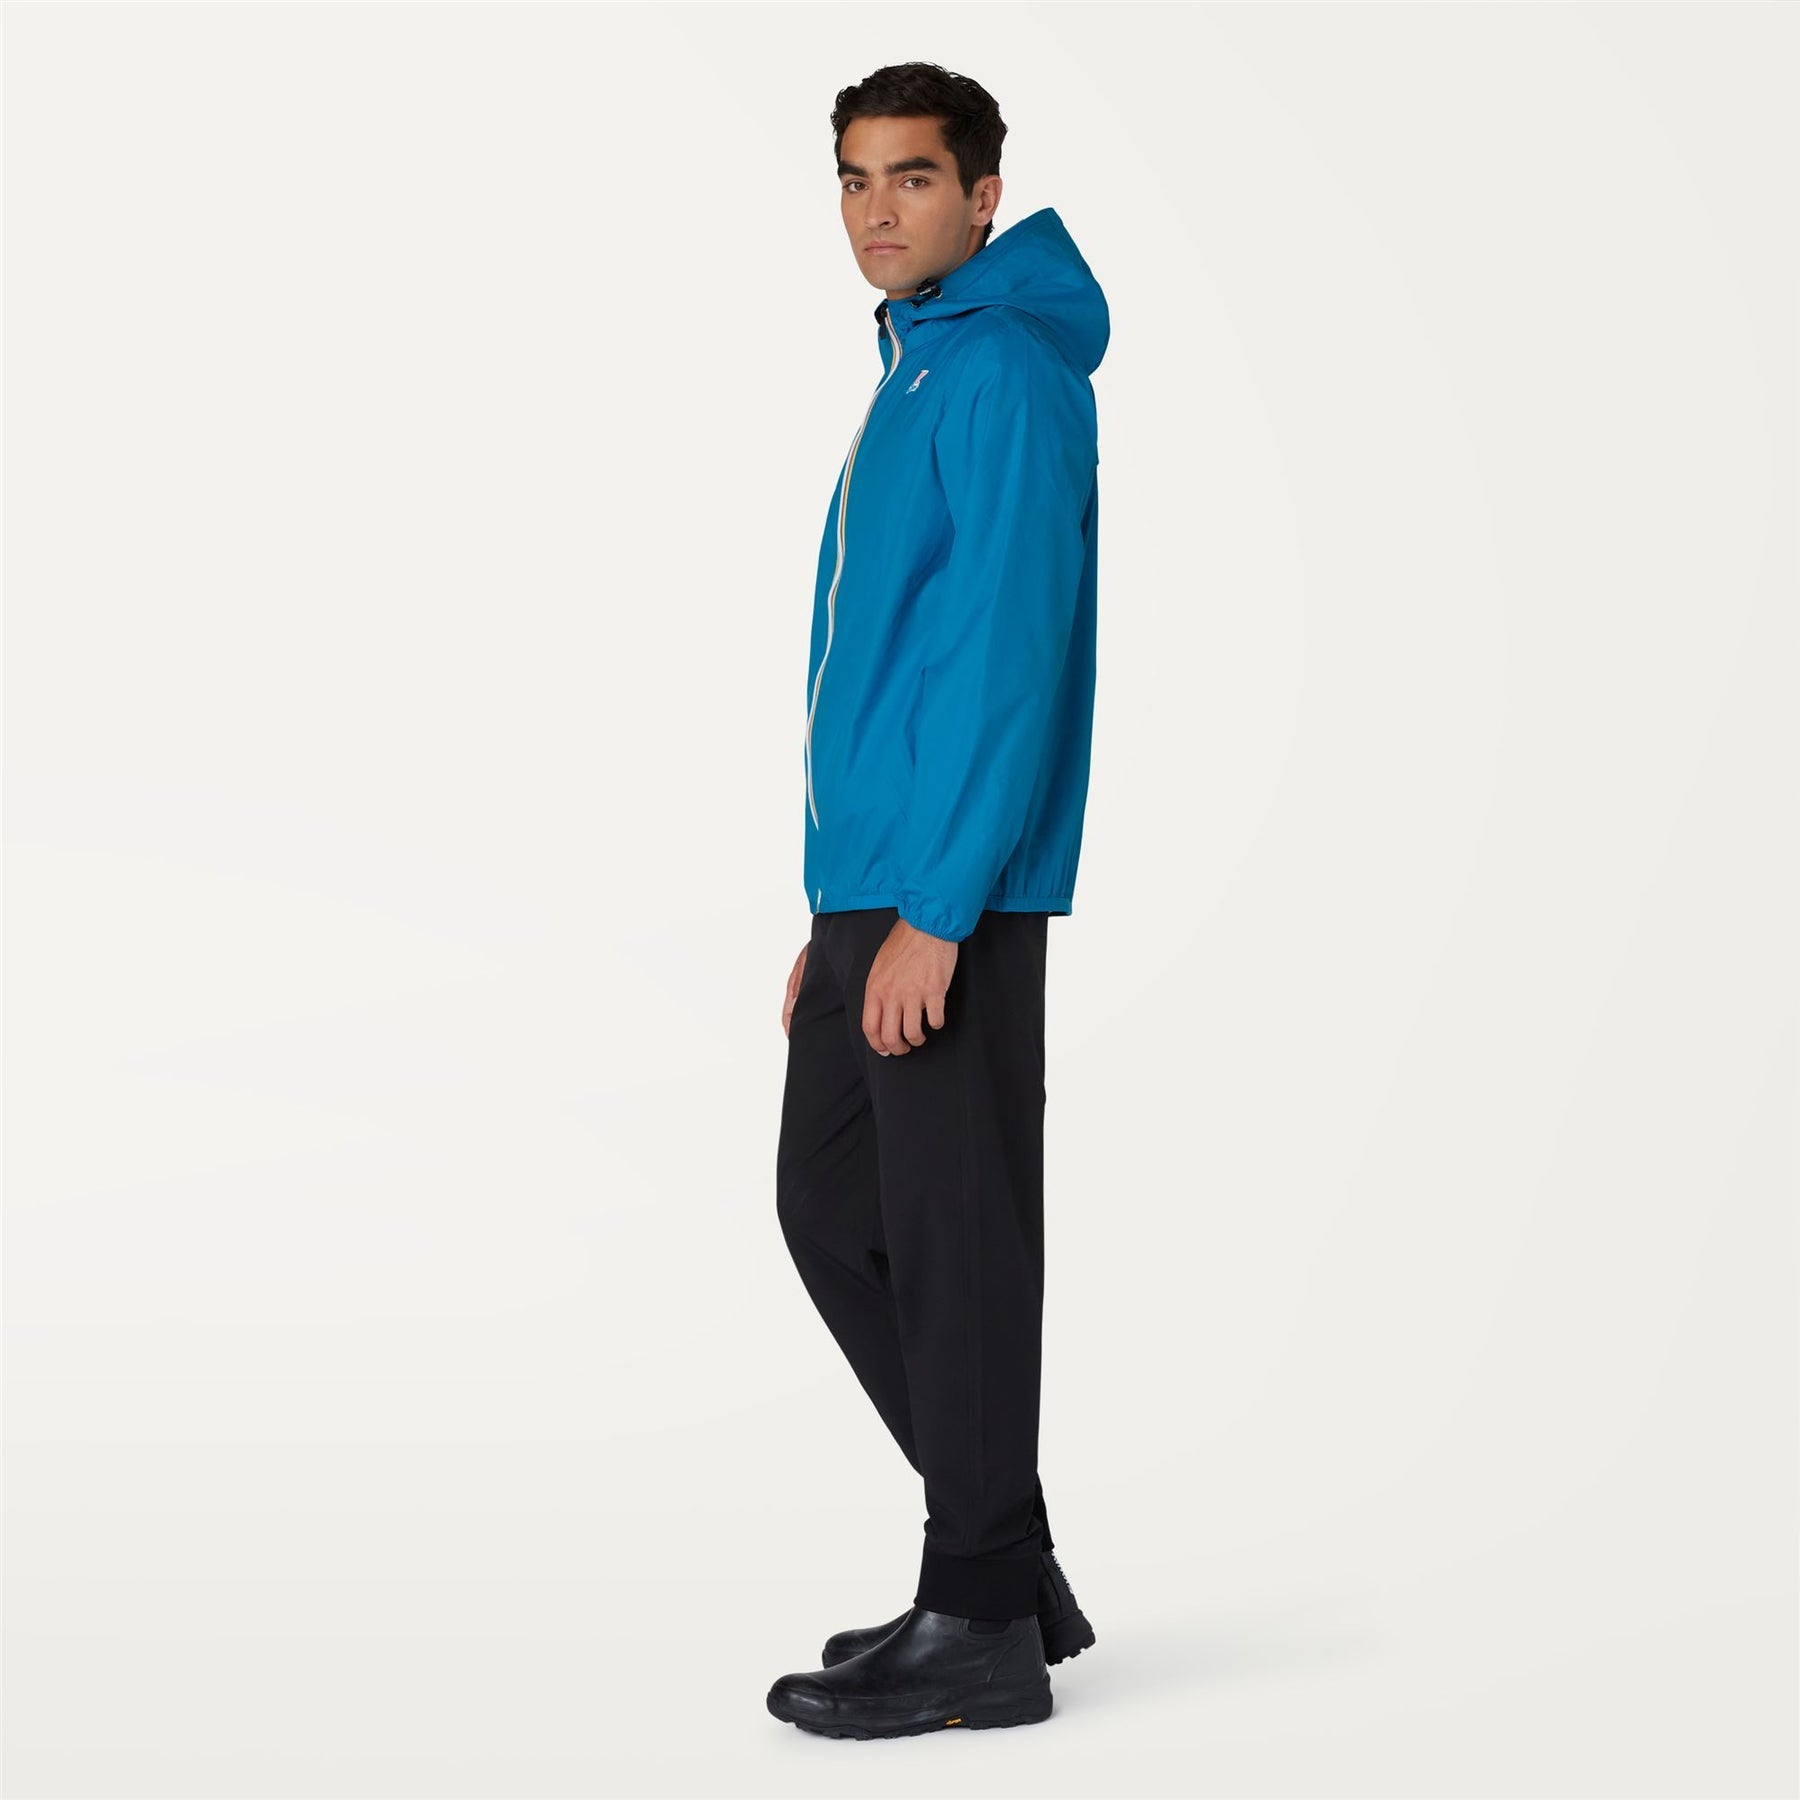 Claude - Unisex Packable Full Zip Waterproof  Rain Jacket in Turquoise Dk